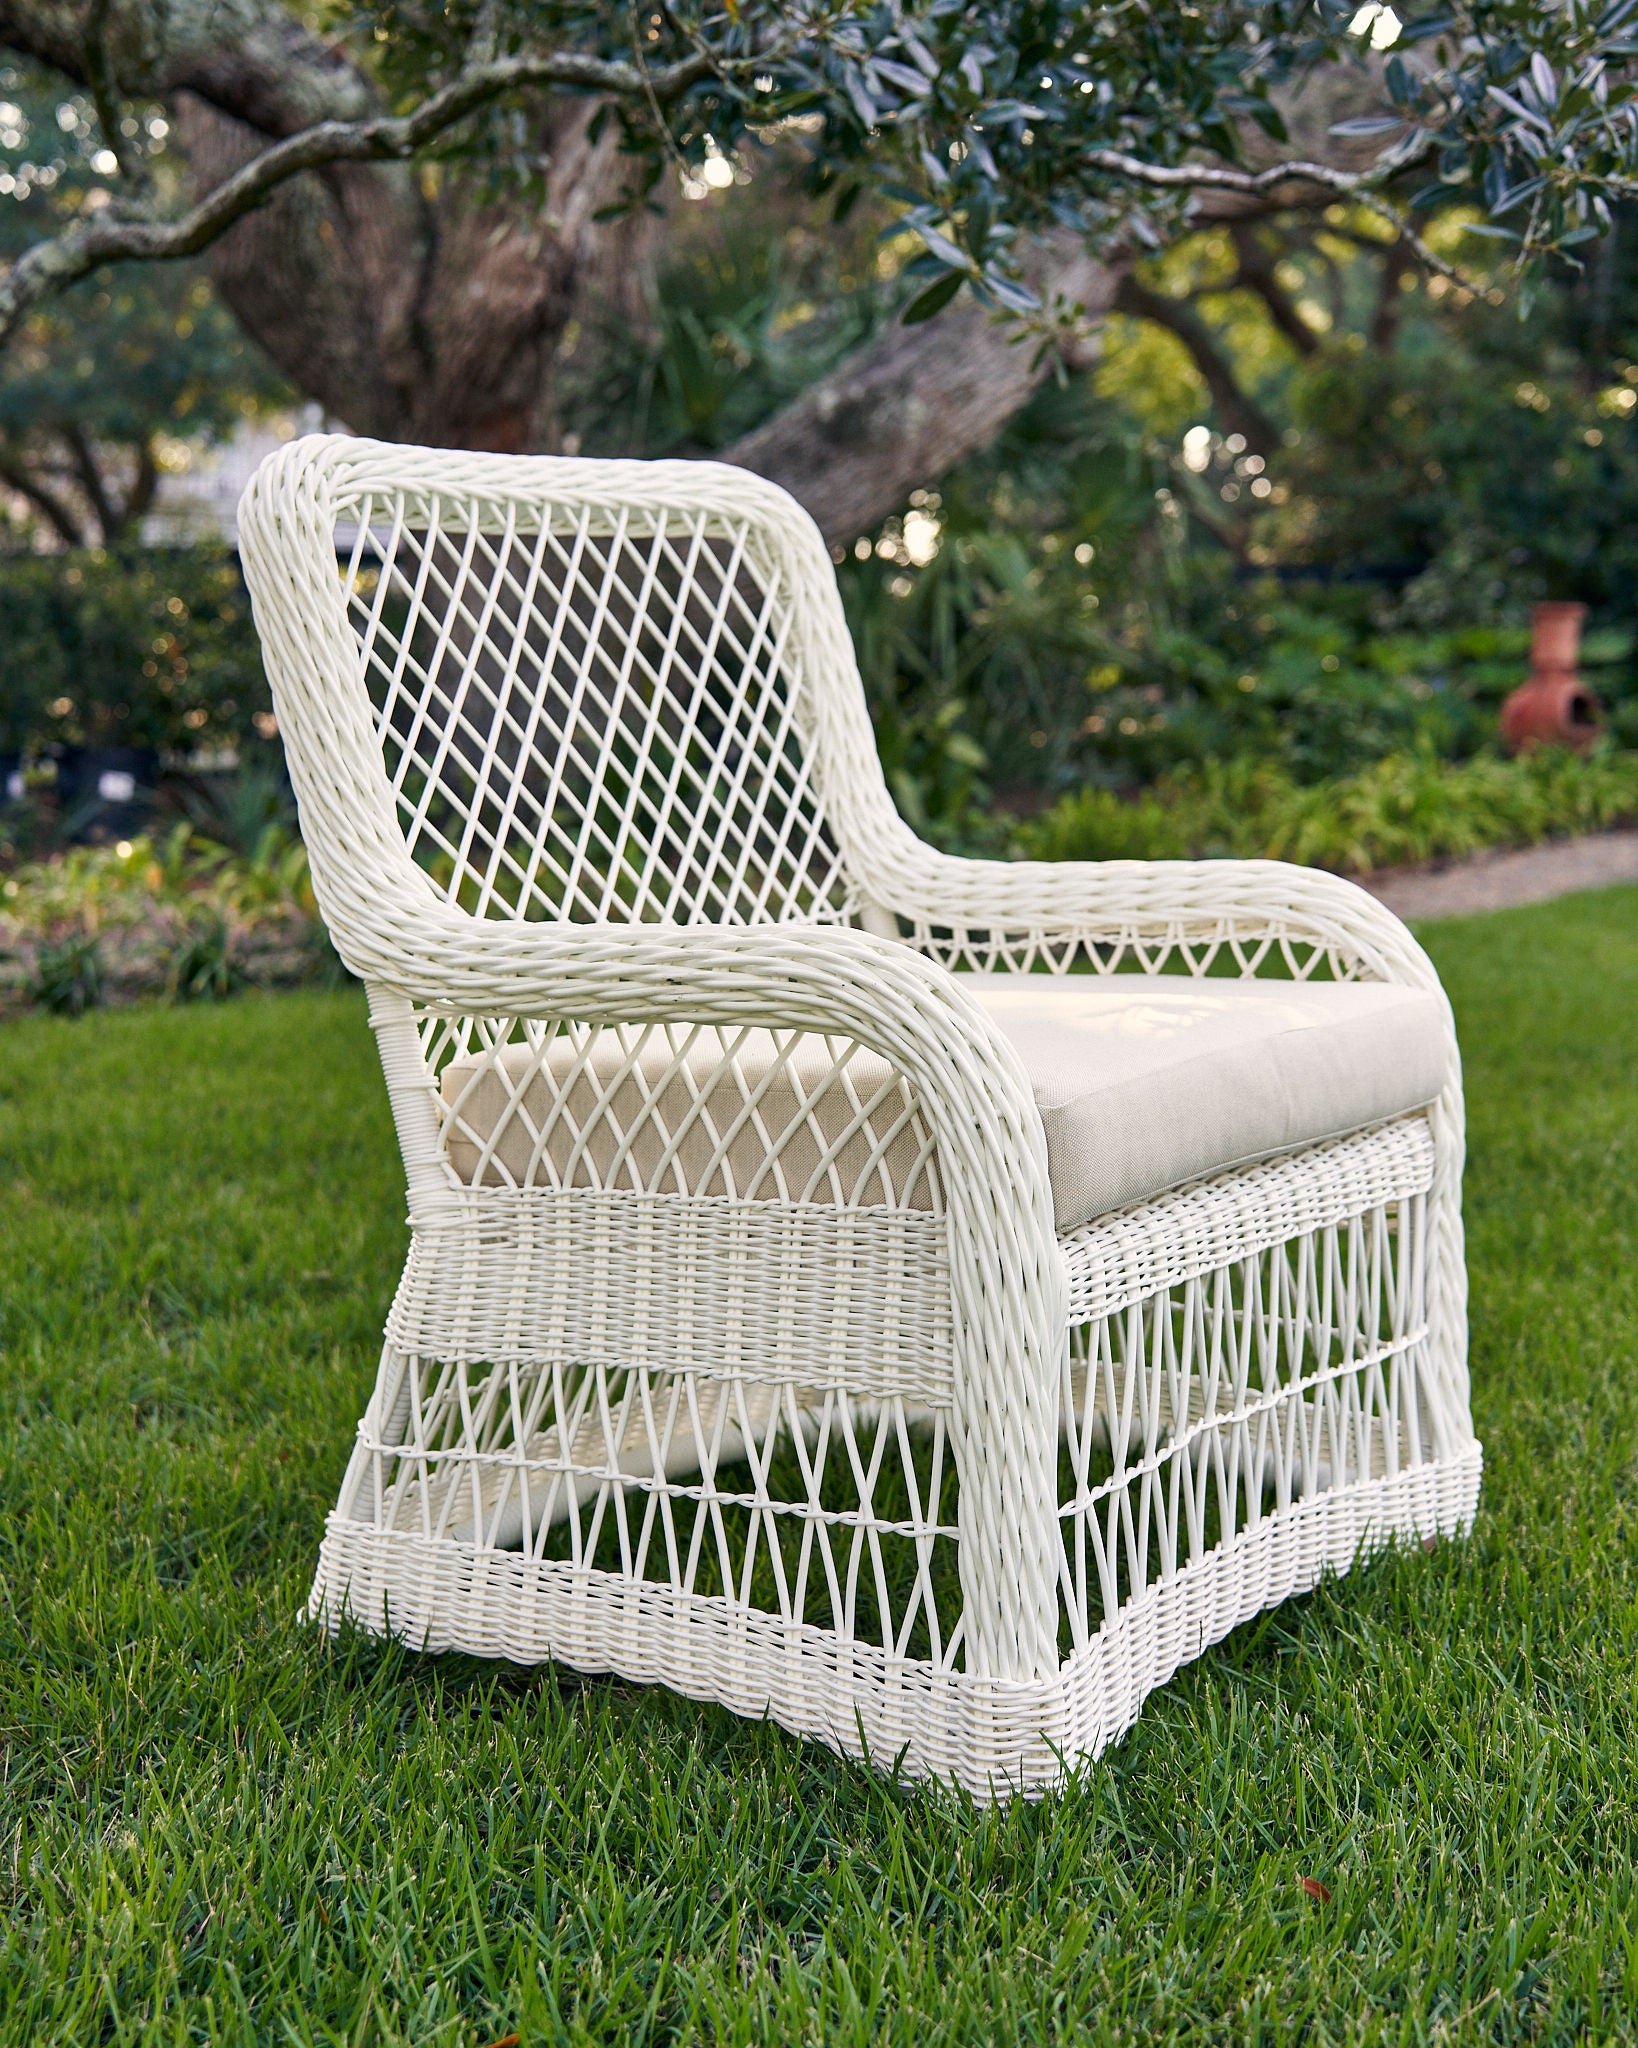 Stunning Wicker Chair